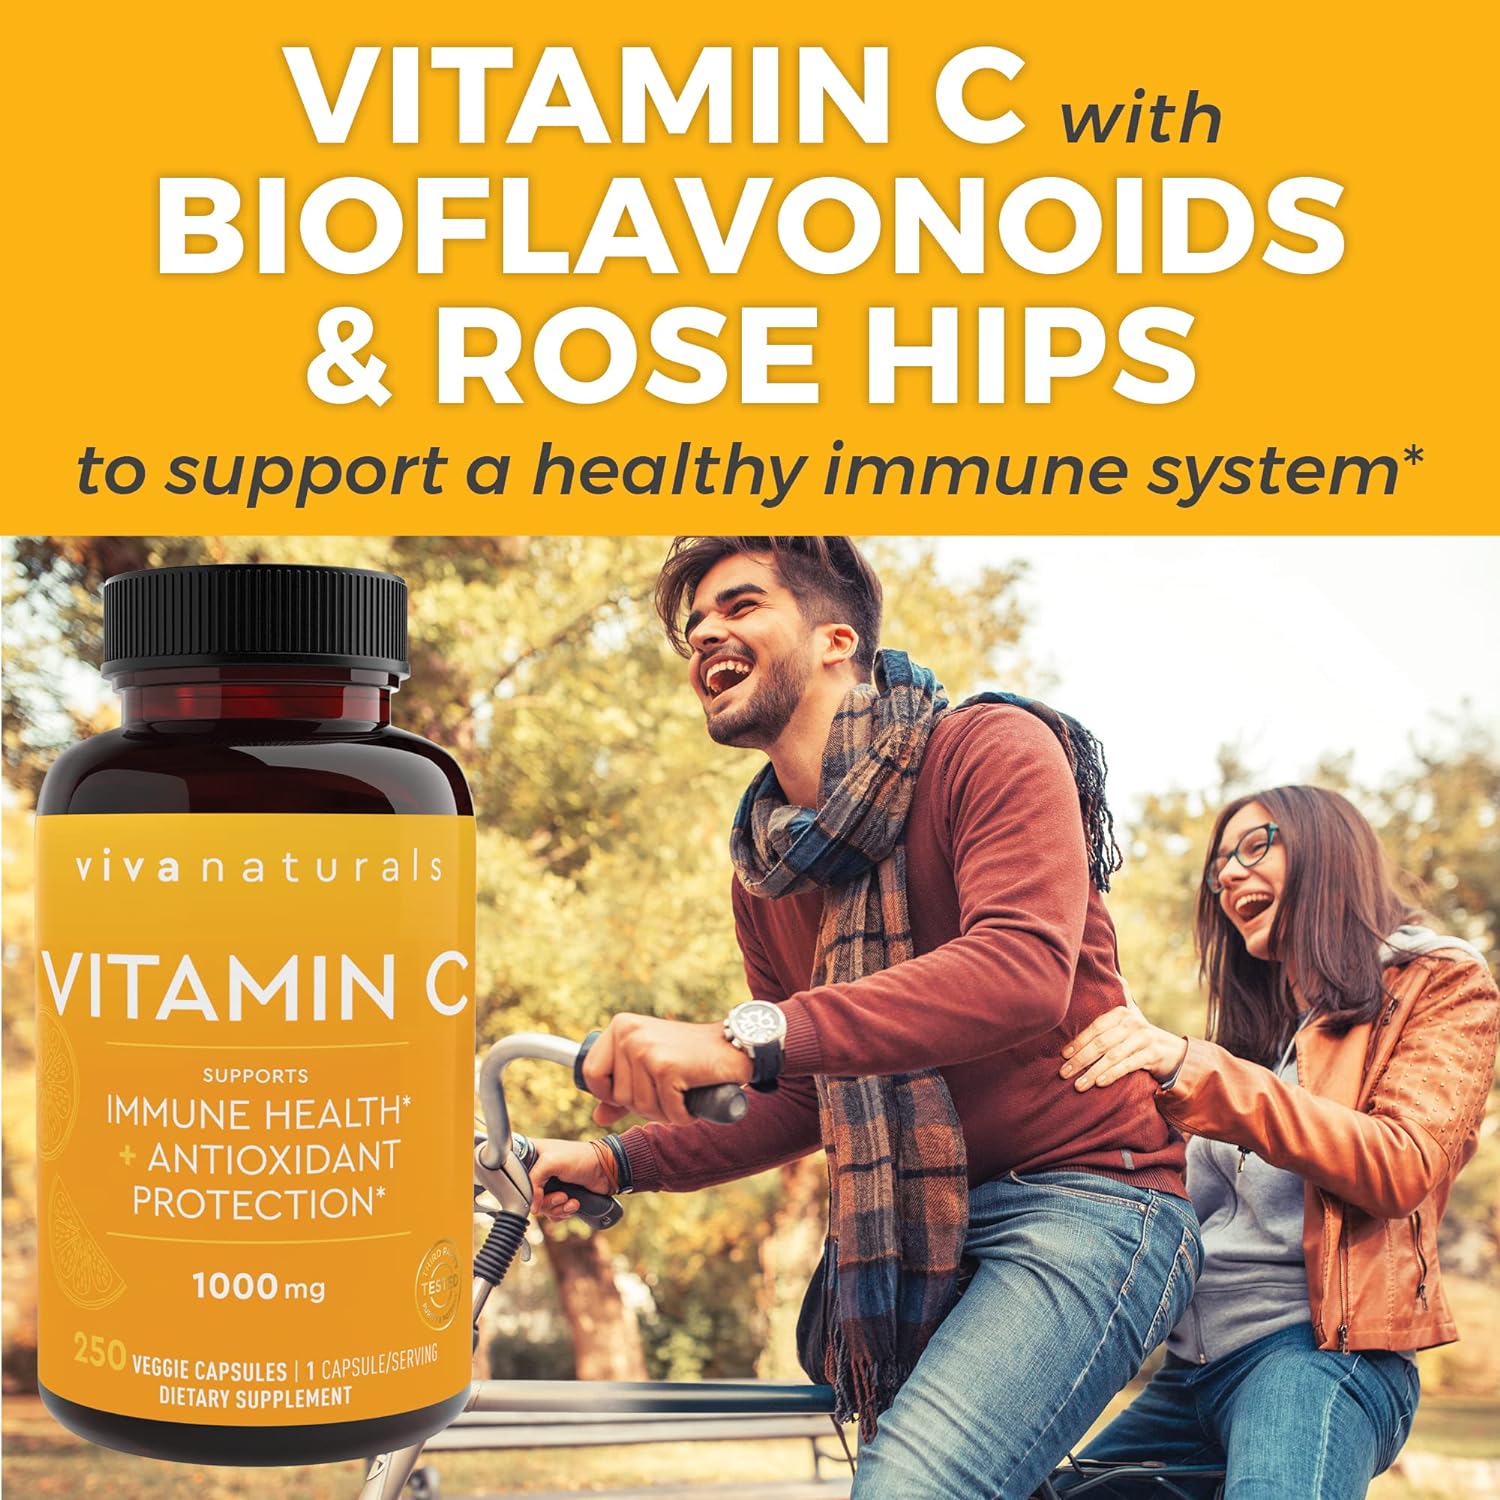 Viva Naturals Vitamin C 1000mg - Non-GMO Vitamin C Supplements with Citrus Bioflavonoids  Rose Hips for Immune Support  Antioxidant Protection, 250 Vegetarian Capsules